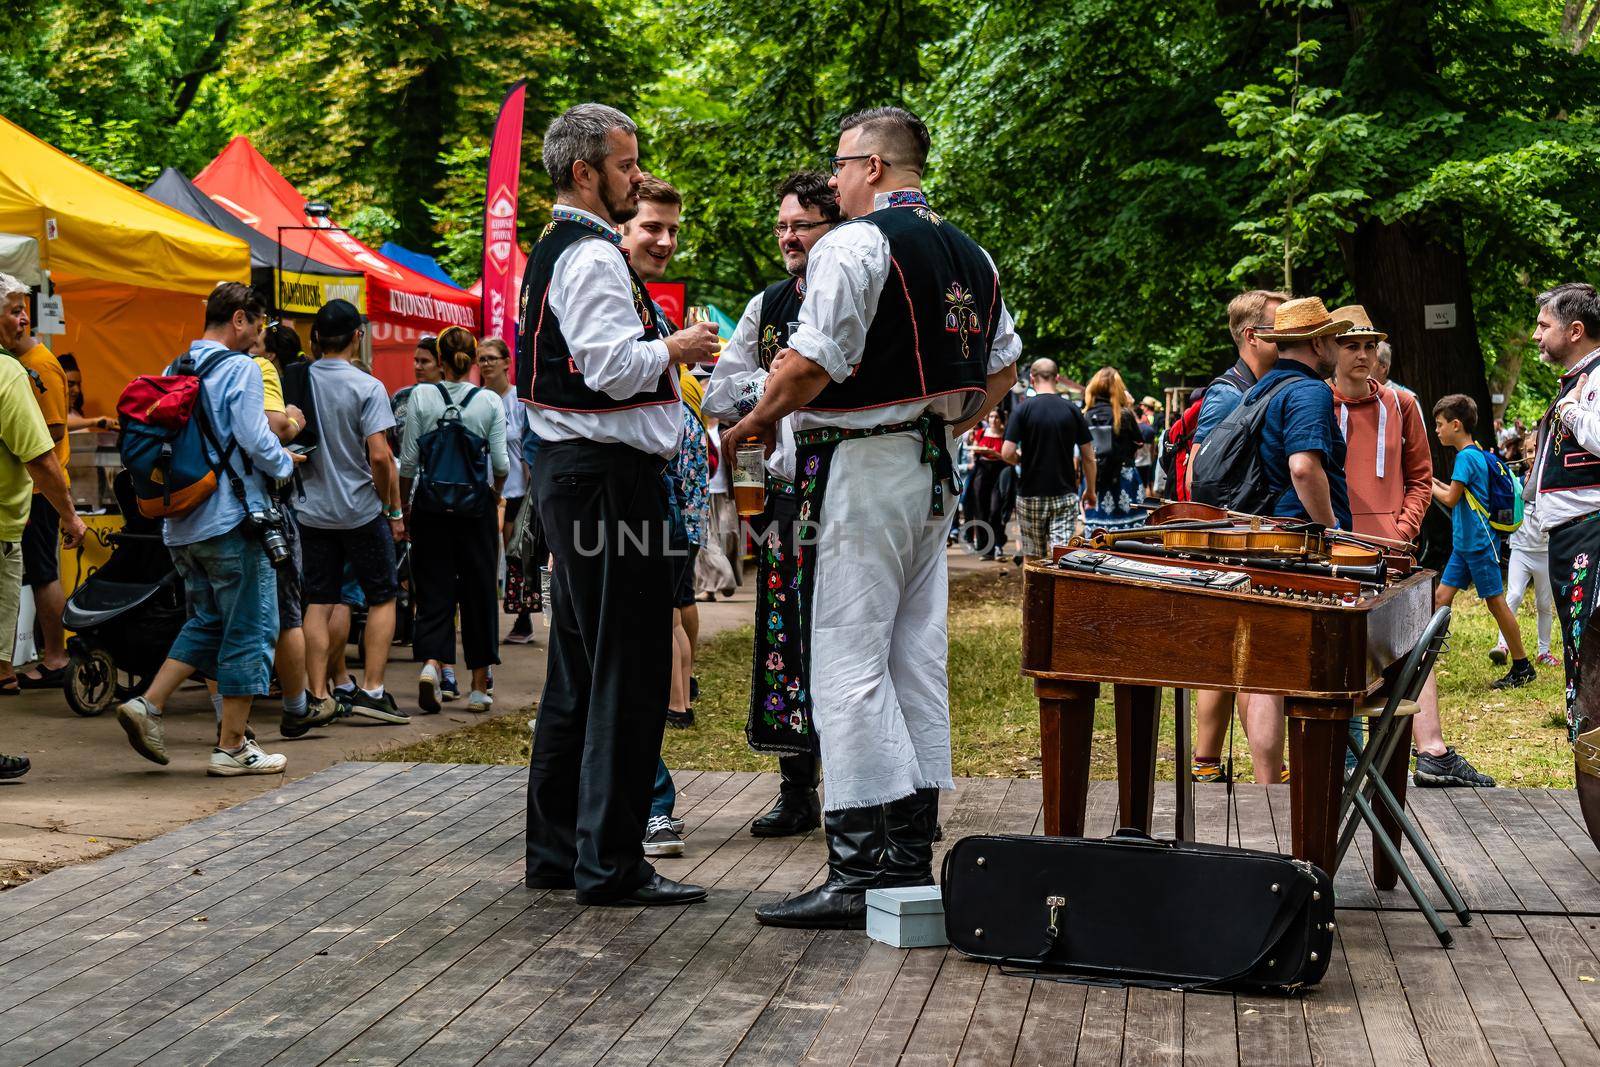 Straznice, Czech Republic - June 23, 2022 International Folklore Festival Musicians in costumes prepare for performances